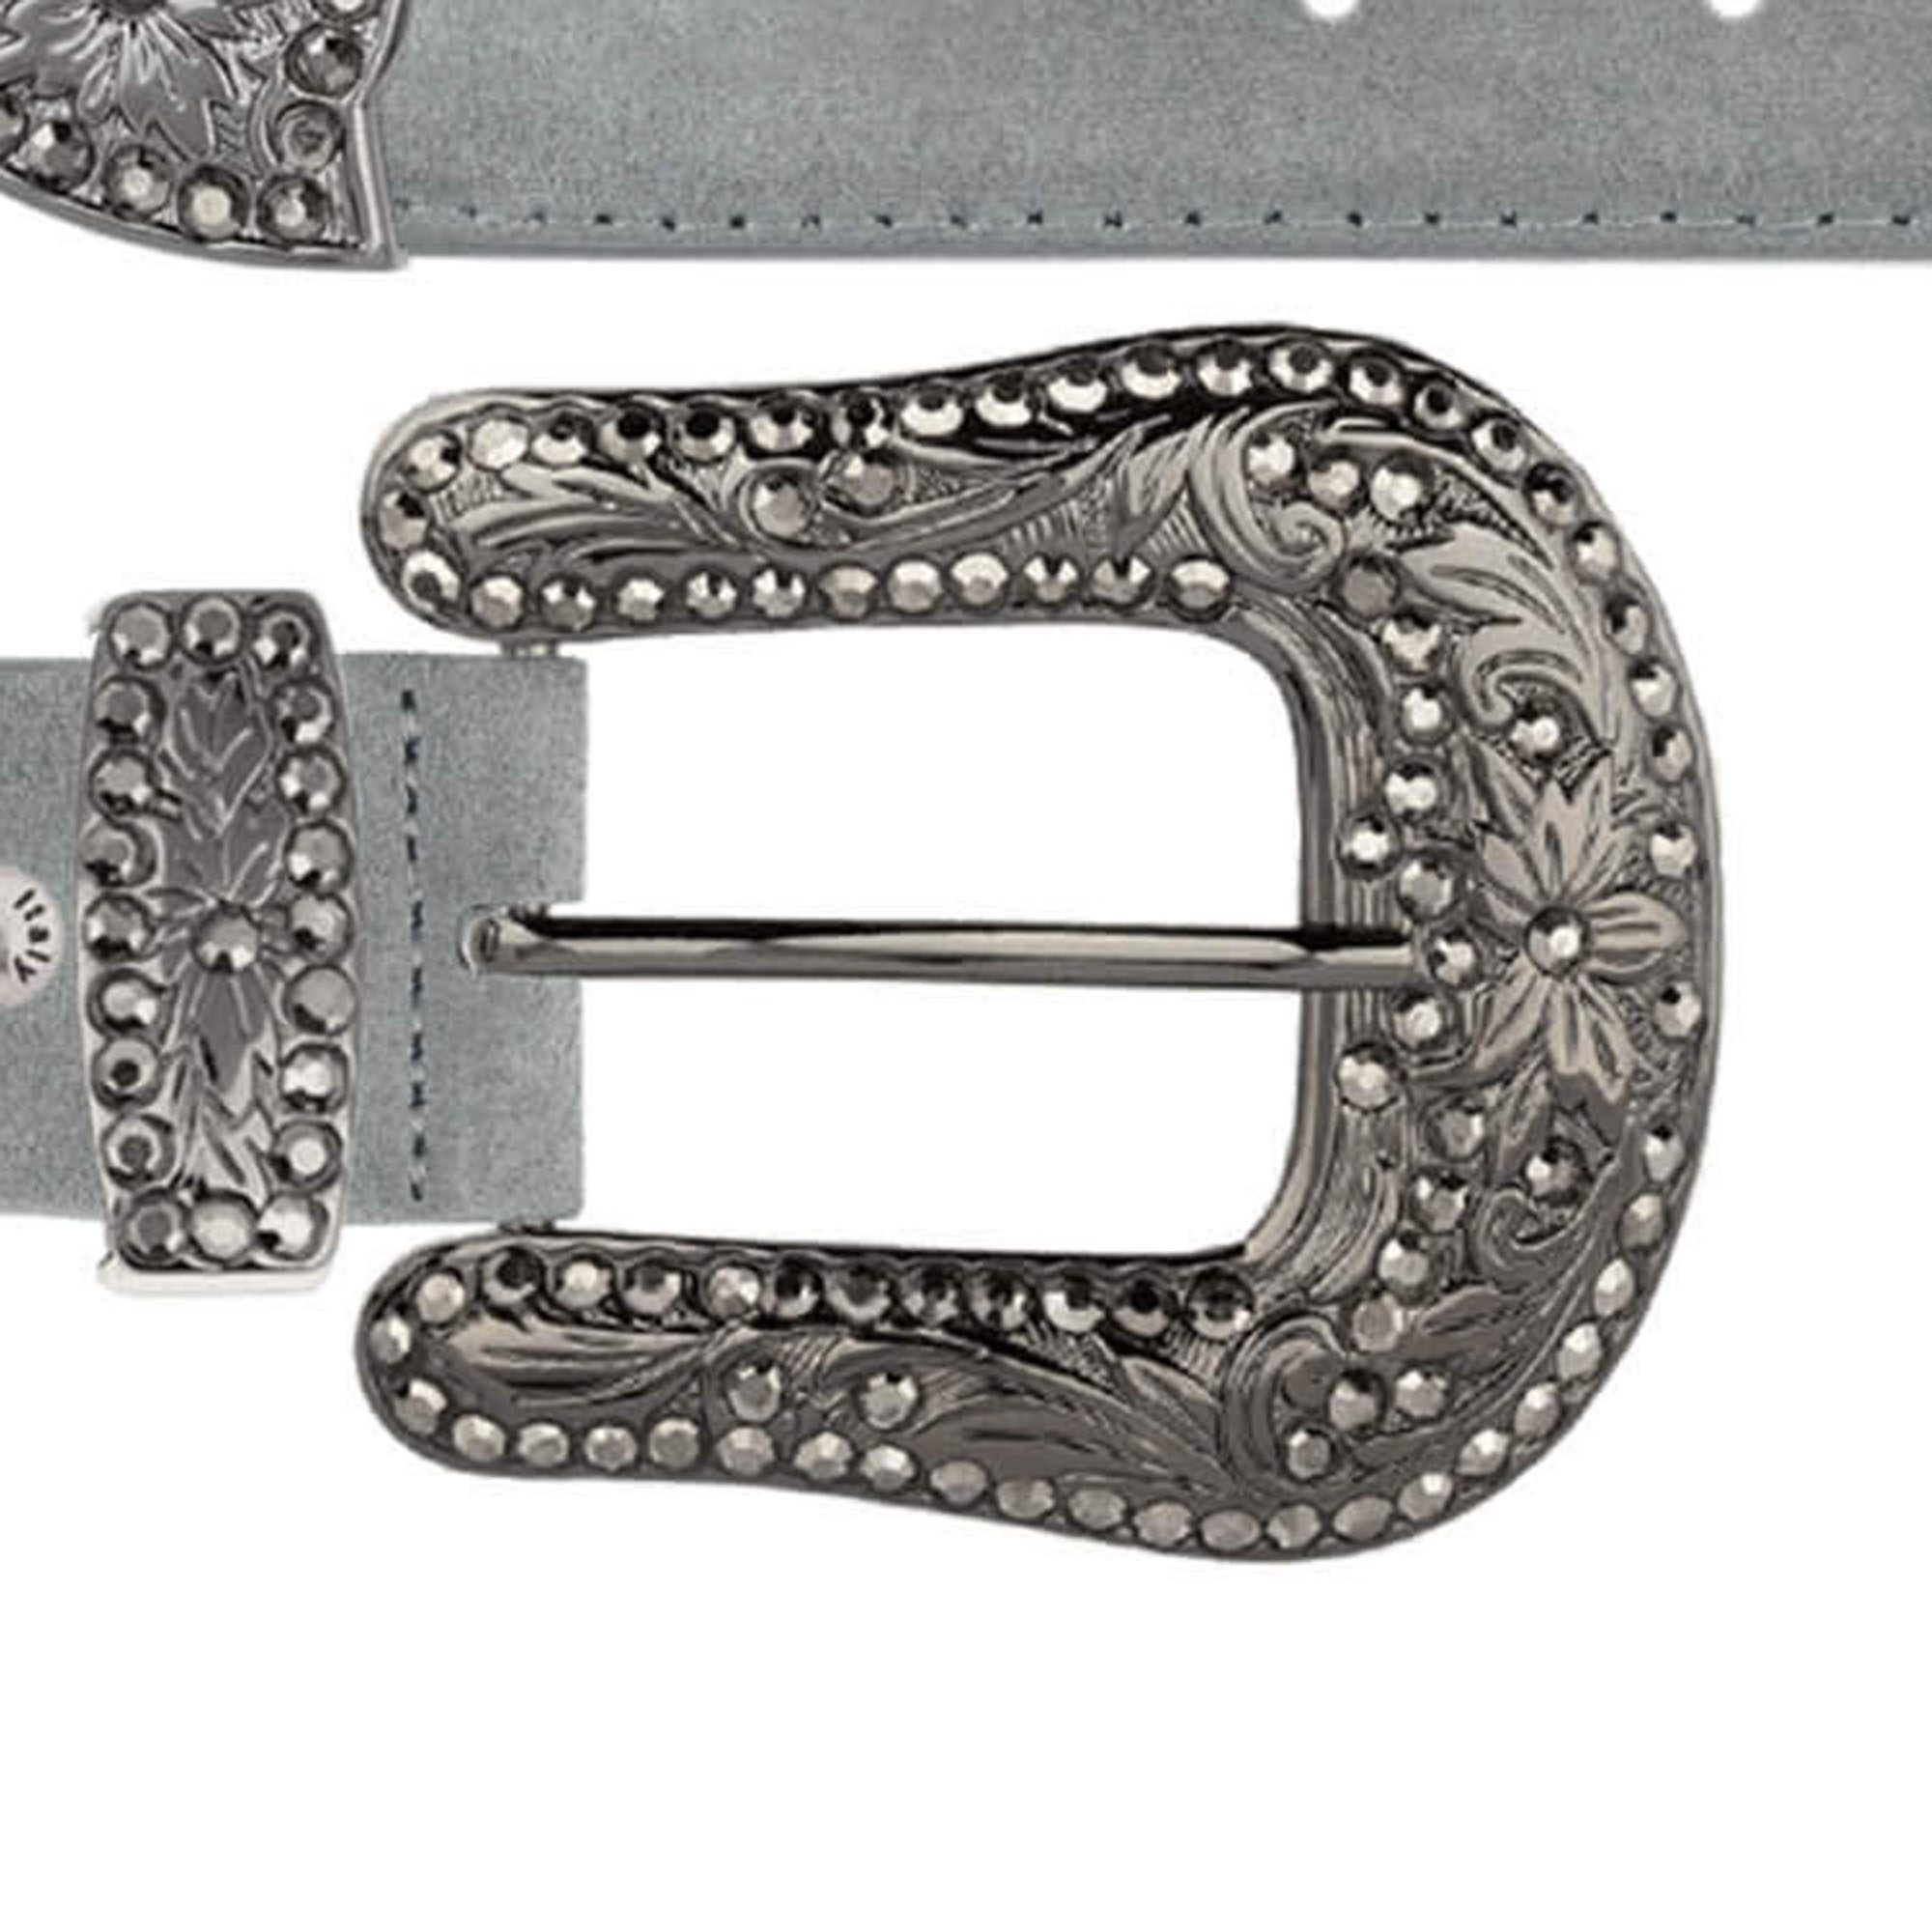 Men's Comfort Click Belt for Suit | Gray Leather Silver Buckle 38 / 95 cm - Gray | Capo Pelle